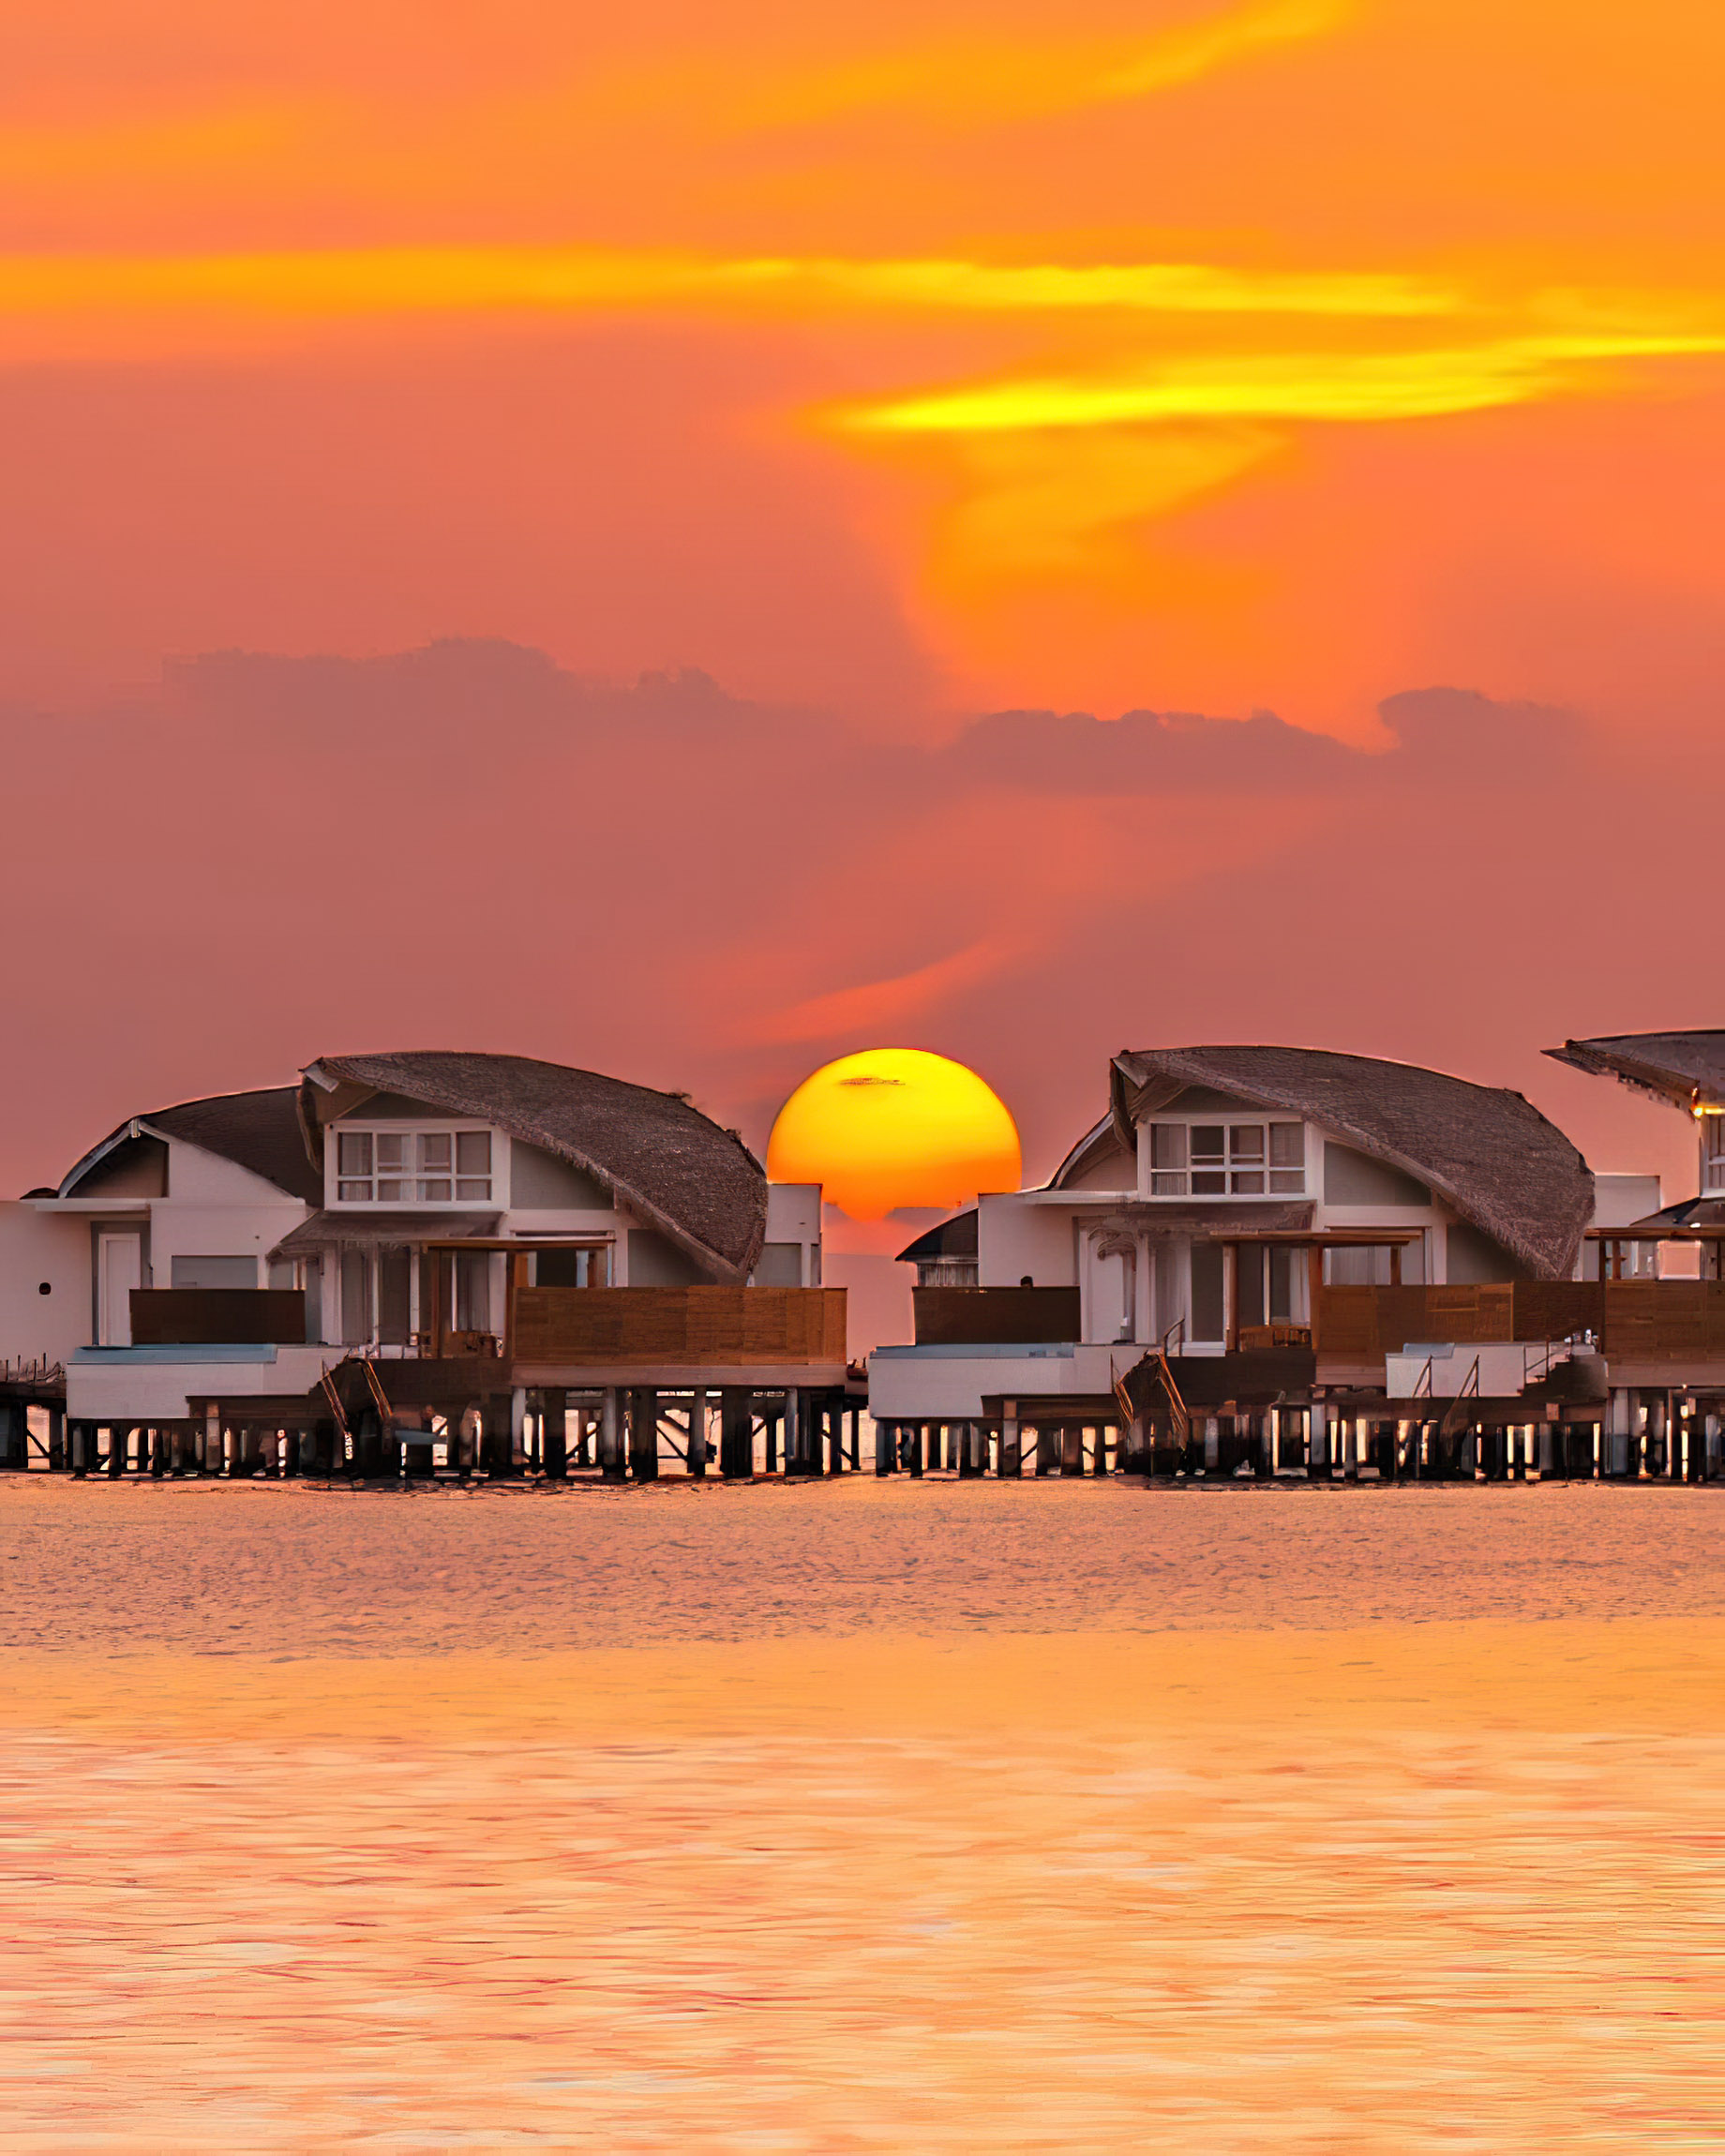 JW Marriott Maldives Resort & Spa – Shaviyani Atoll, Maldives – Overwater Pool Villas Sunset